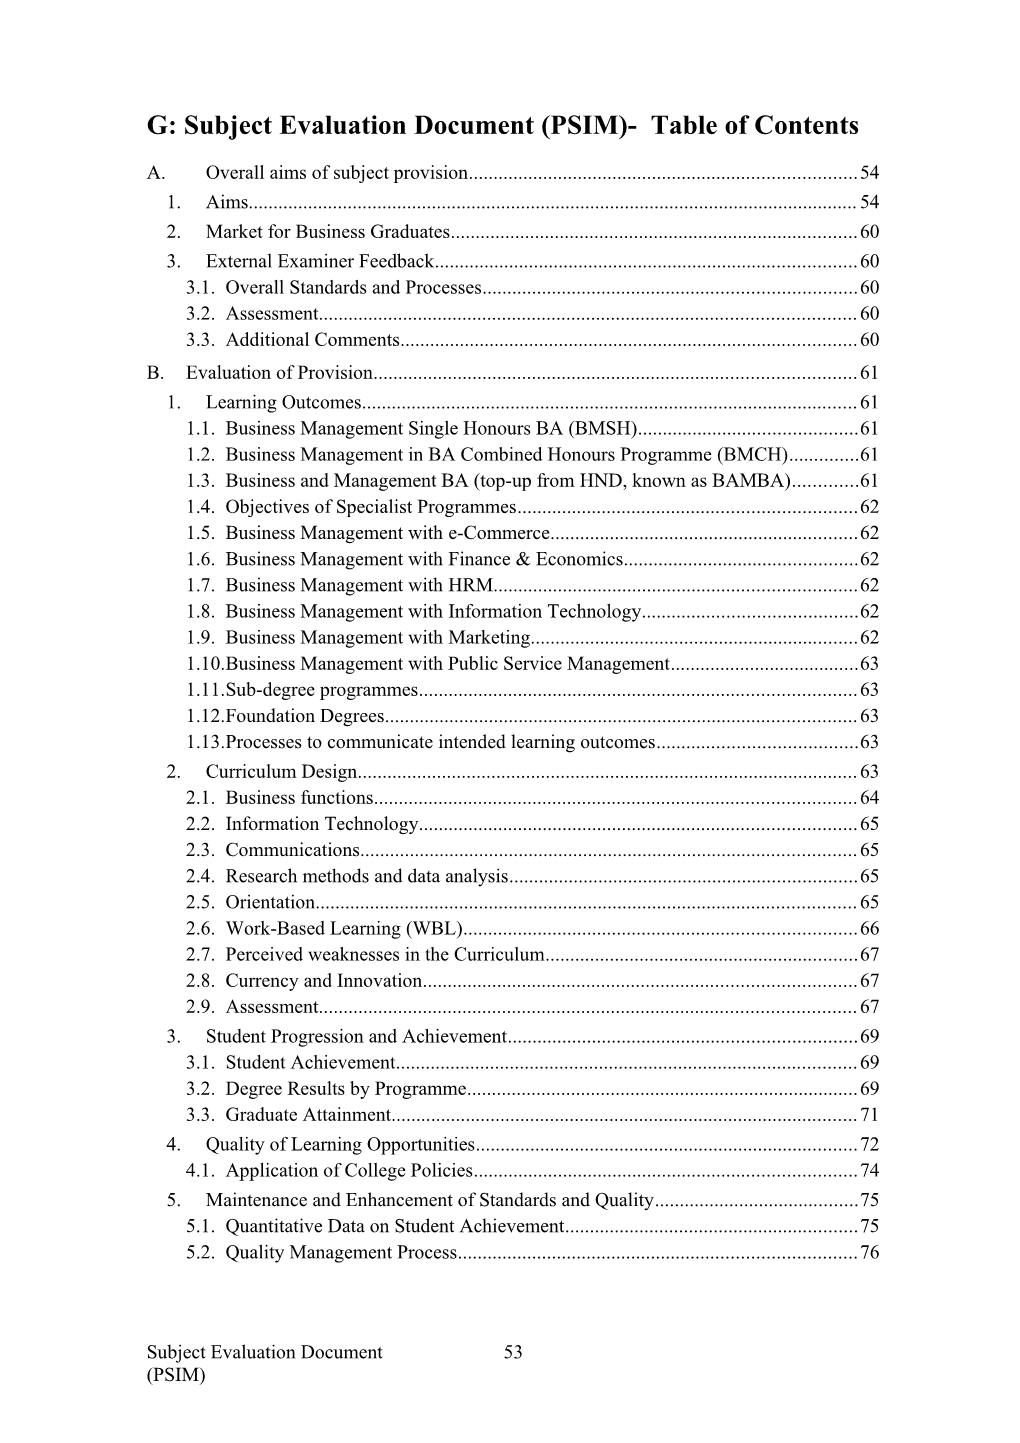 Subject Evaluation Document